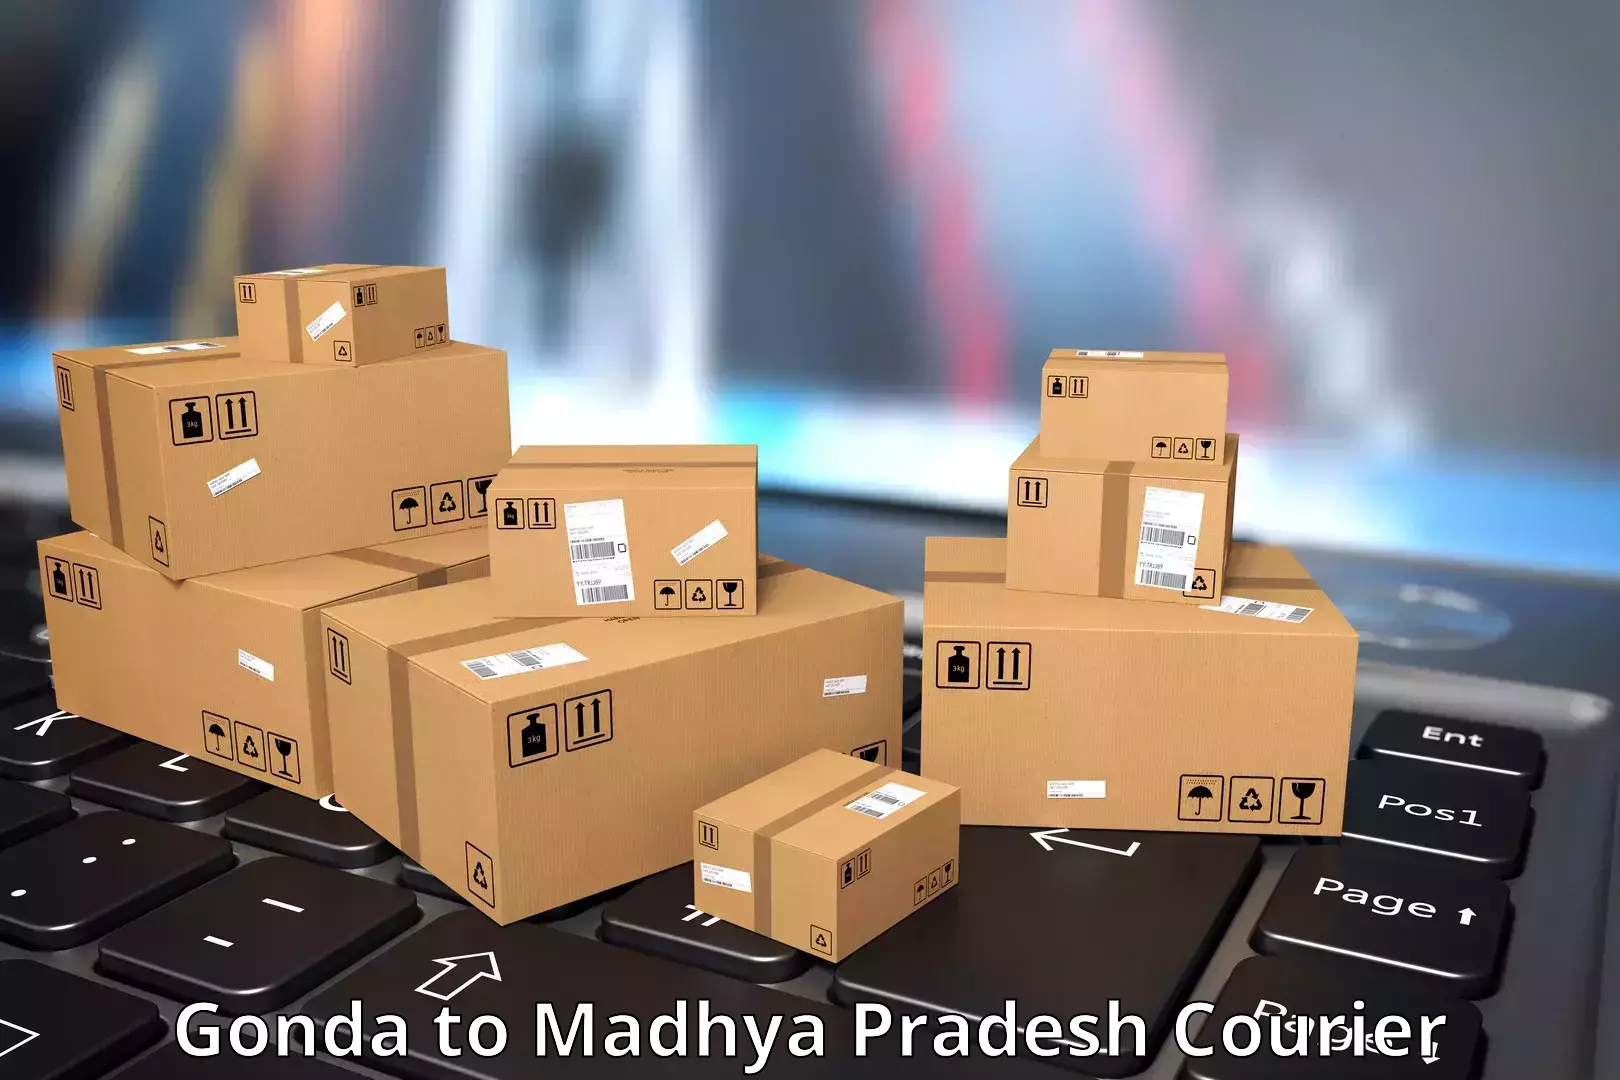 24/7 courier service Gonda to Madhya Pradesh